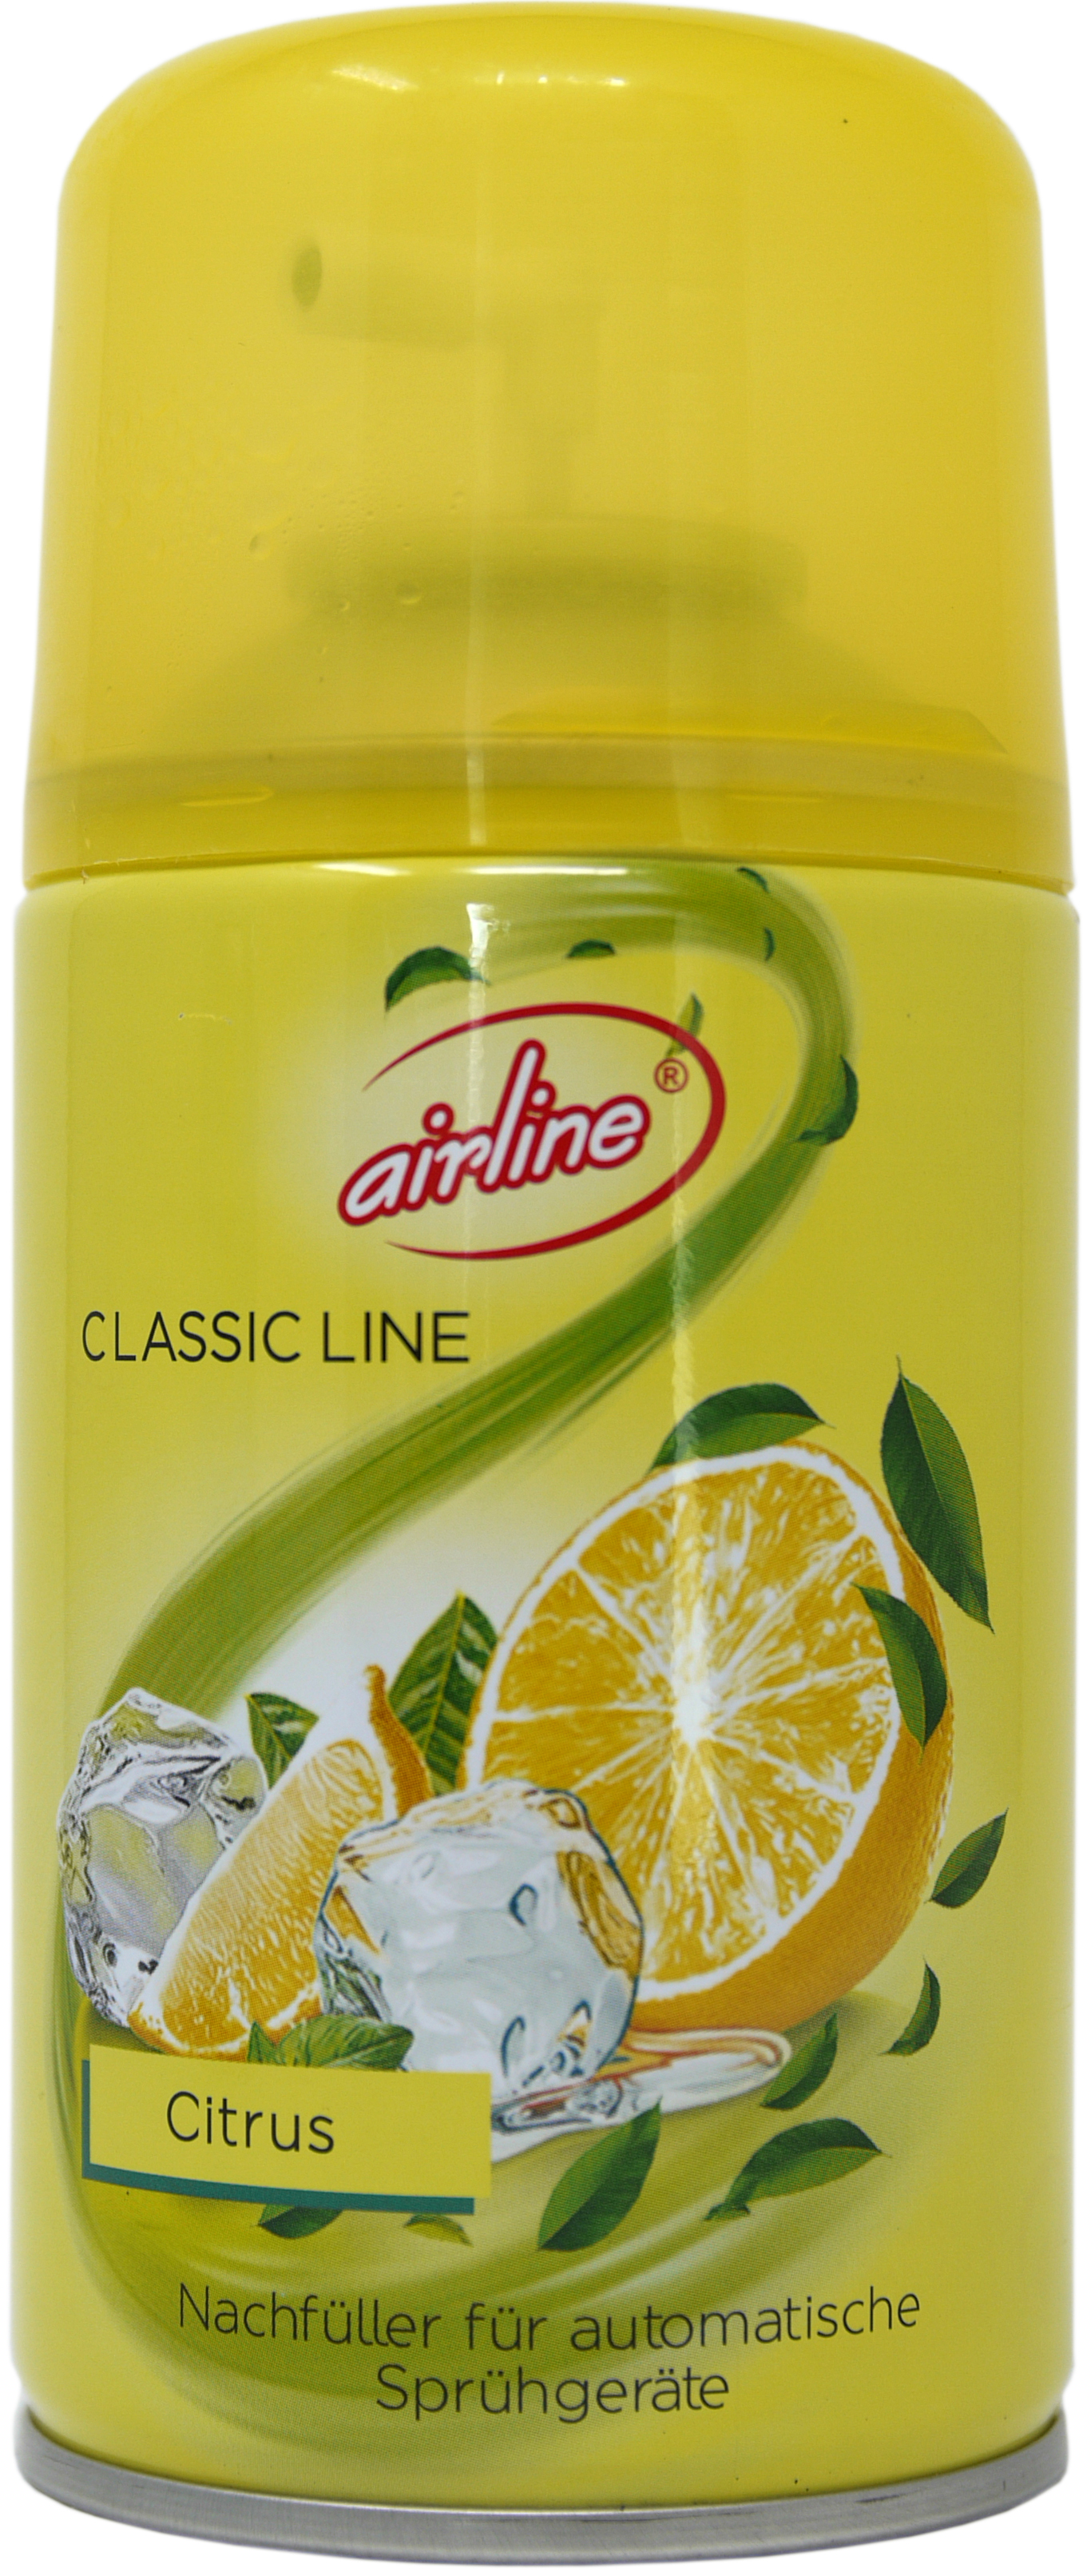 00505 - airline Classic Line Citrus Nachfüllkartusche 250 ml